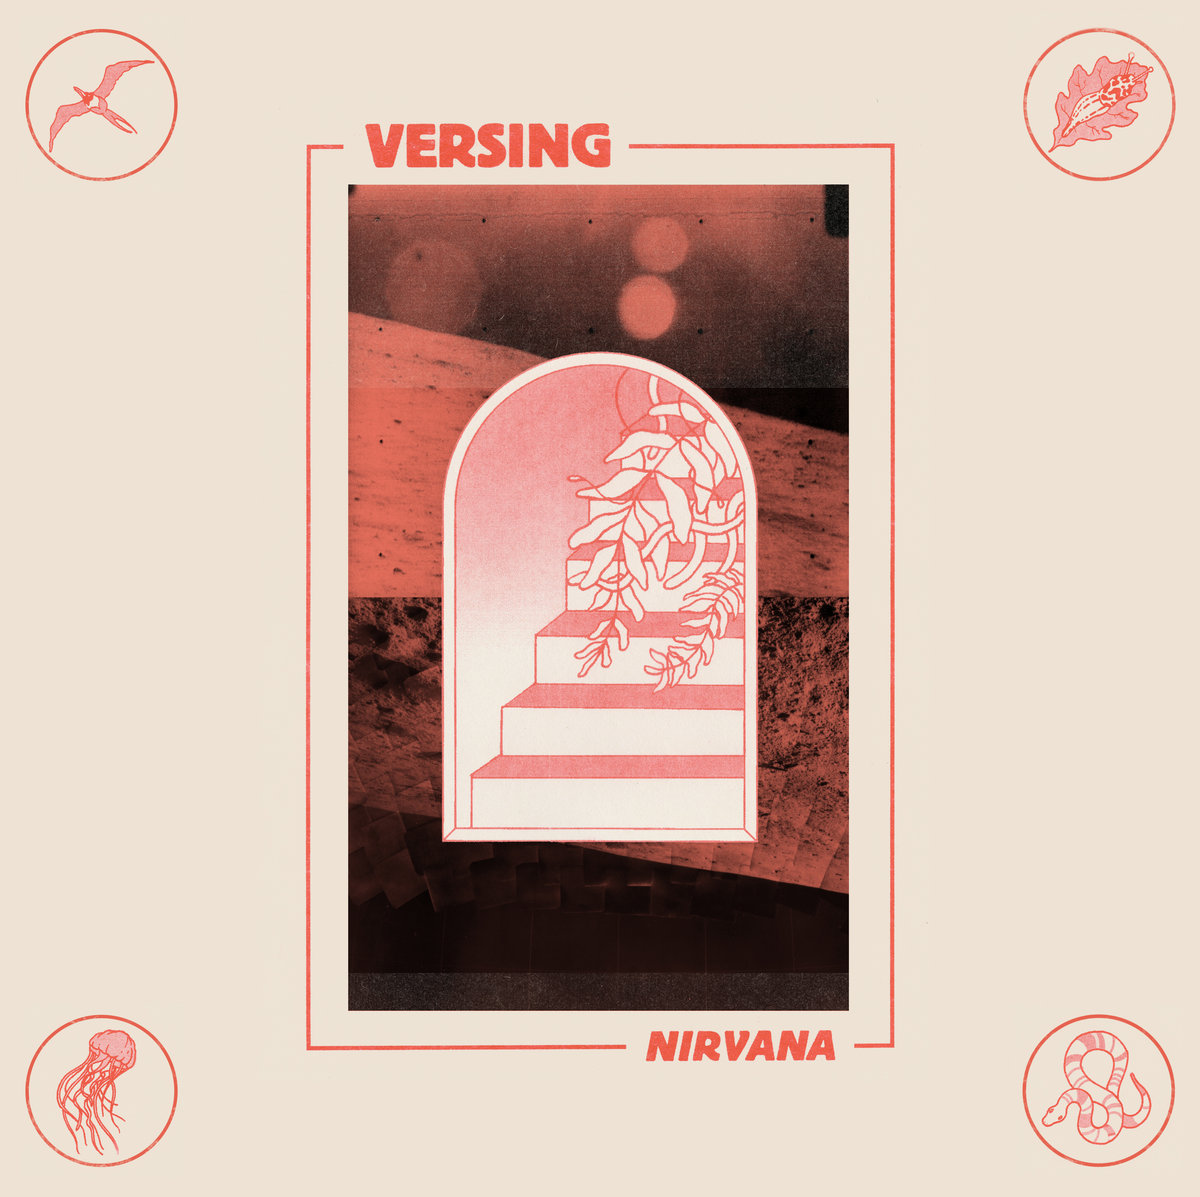 Nirvana by Versing